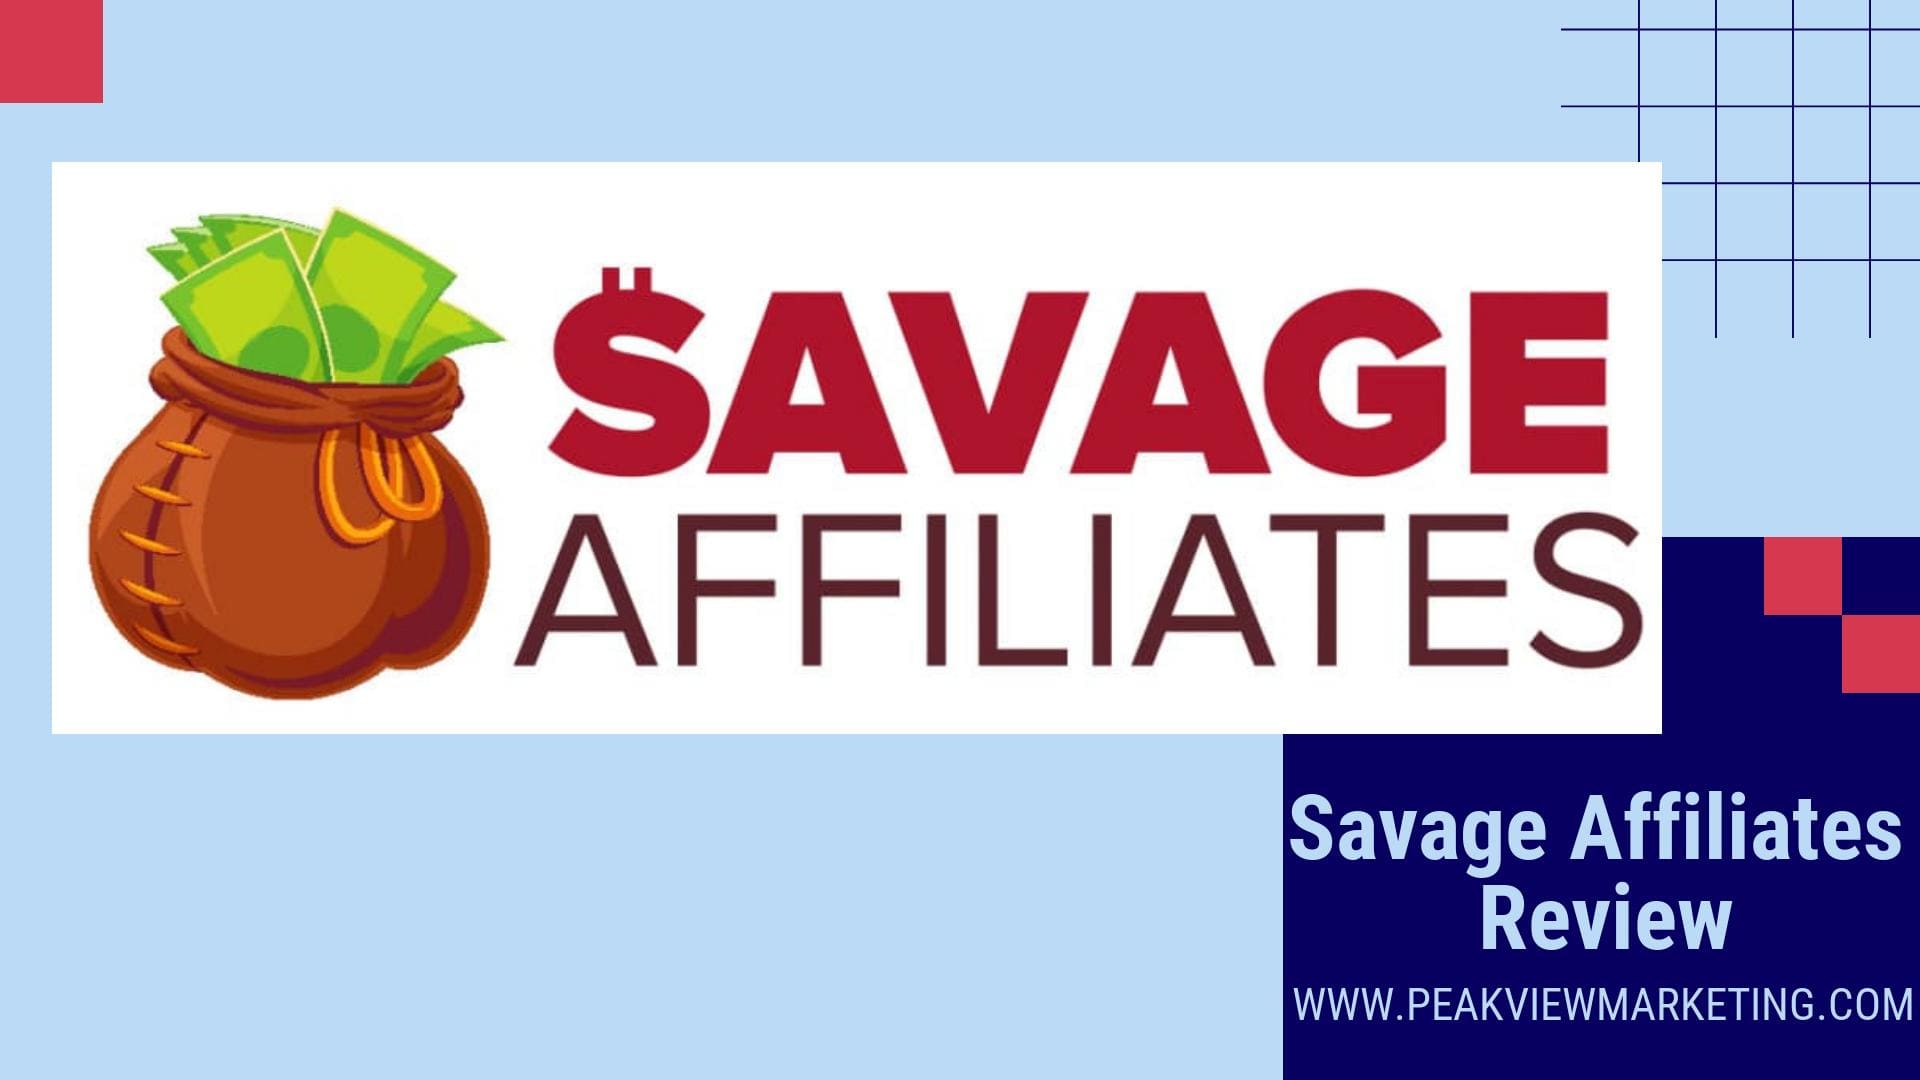 Savage Affiliates Review Image